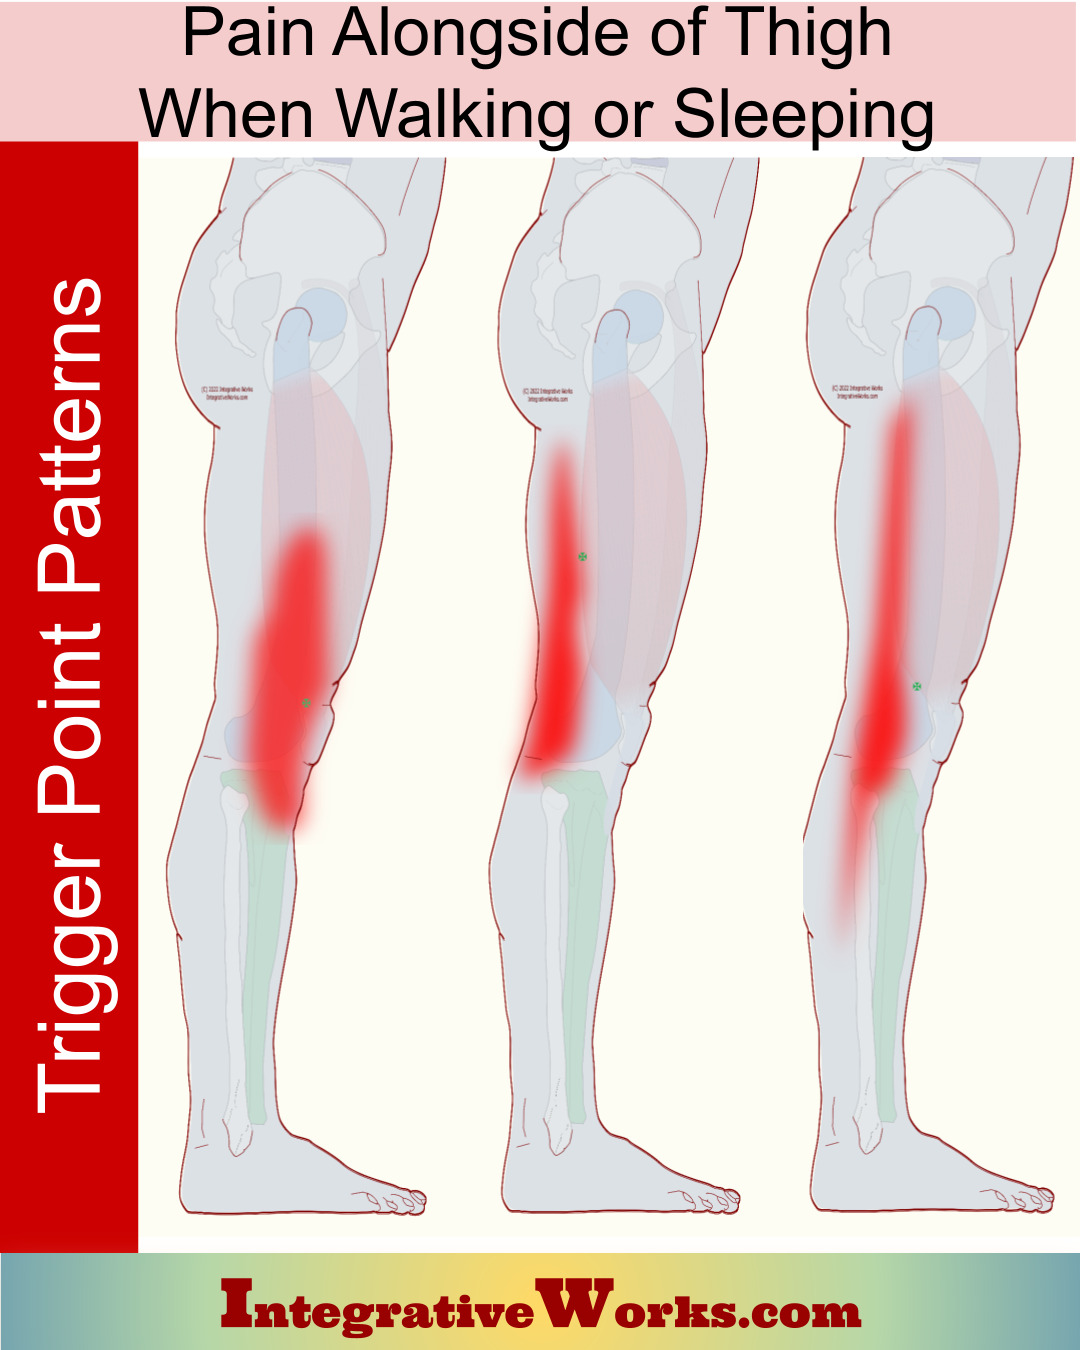 Pain Alongside of Thigh when Walking or Sleeping